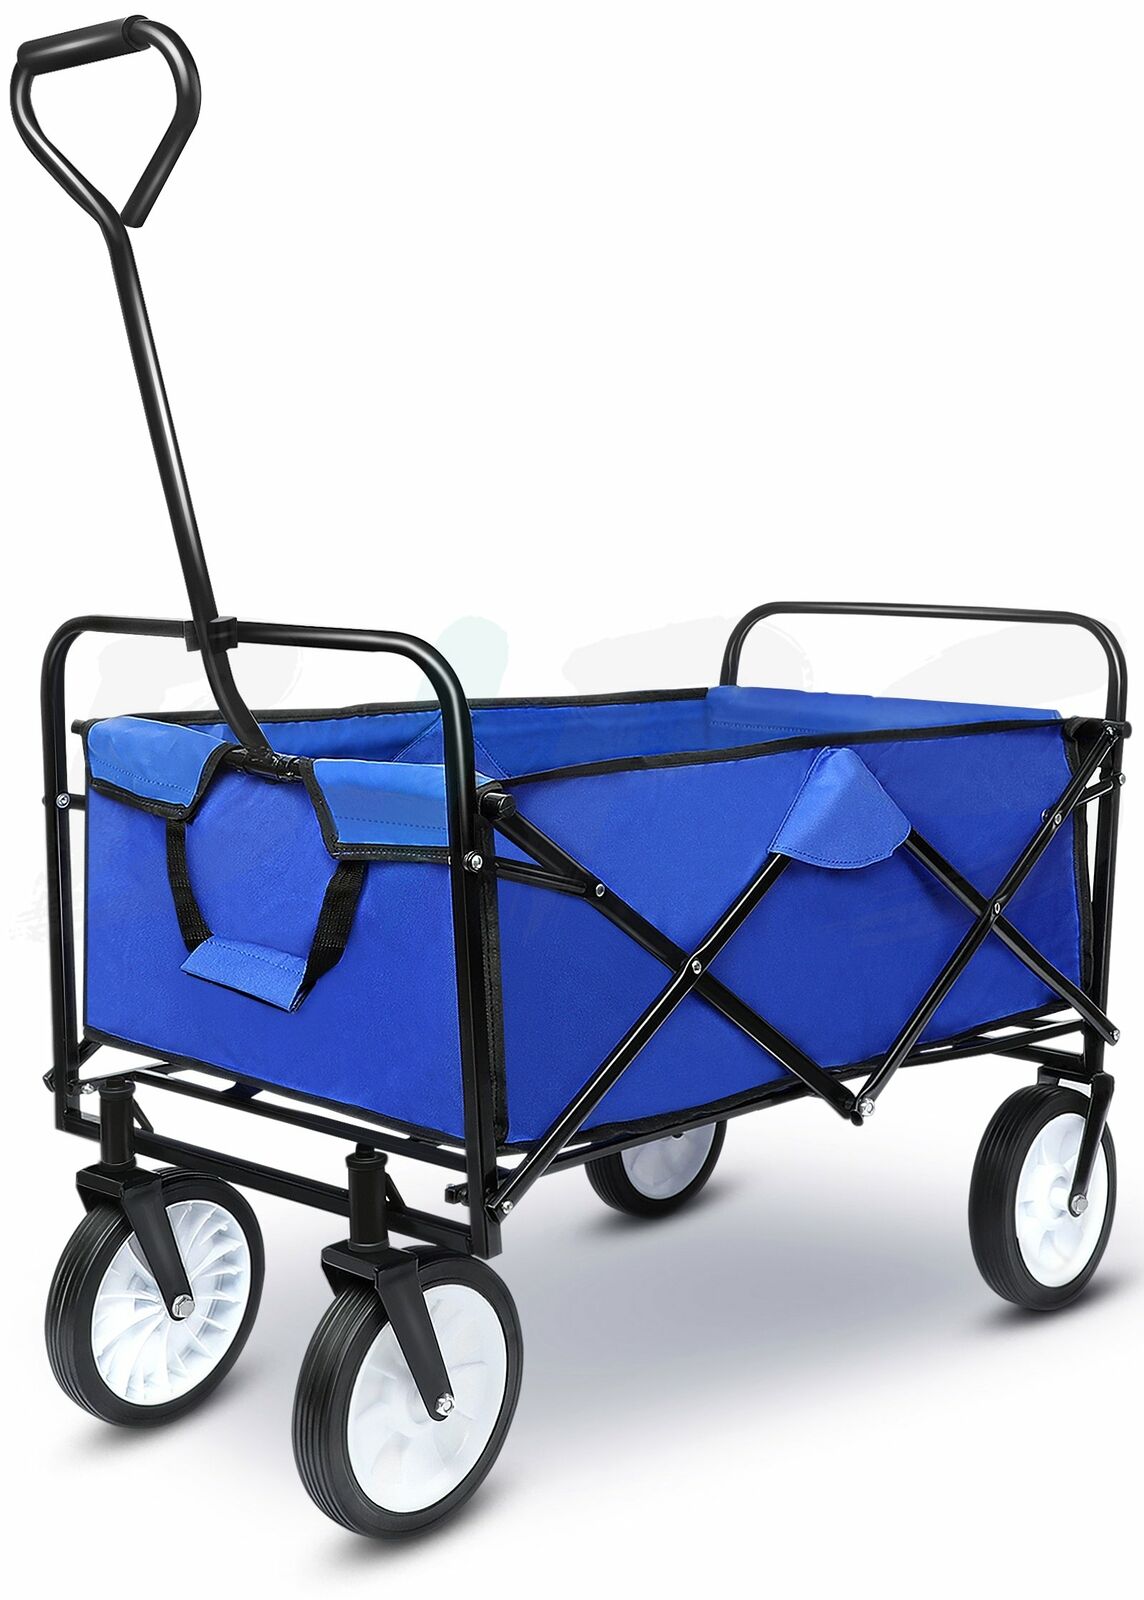 Collapsible Folding Wagon Cart Outdoor Utility Heavy Duty Garden Trolley 176lbs